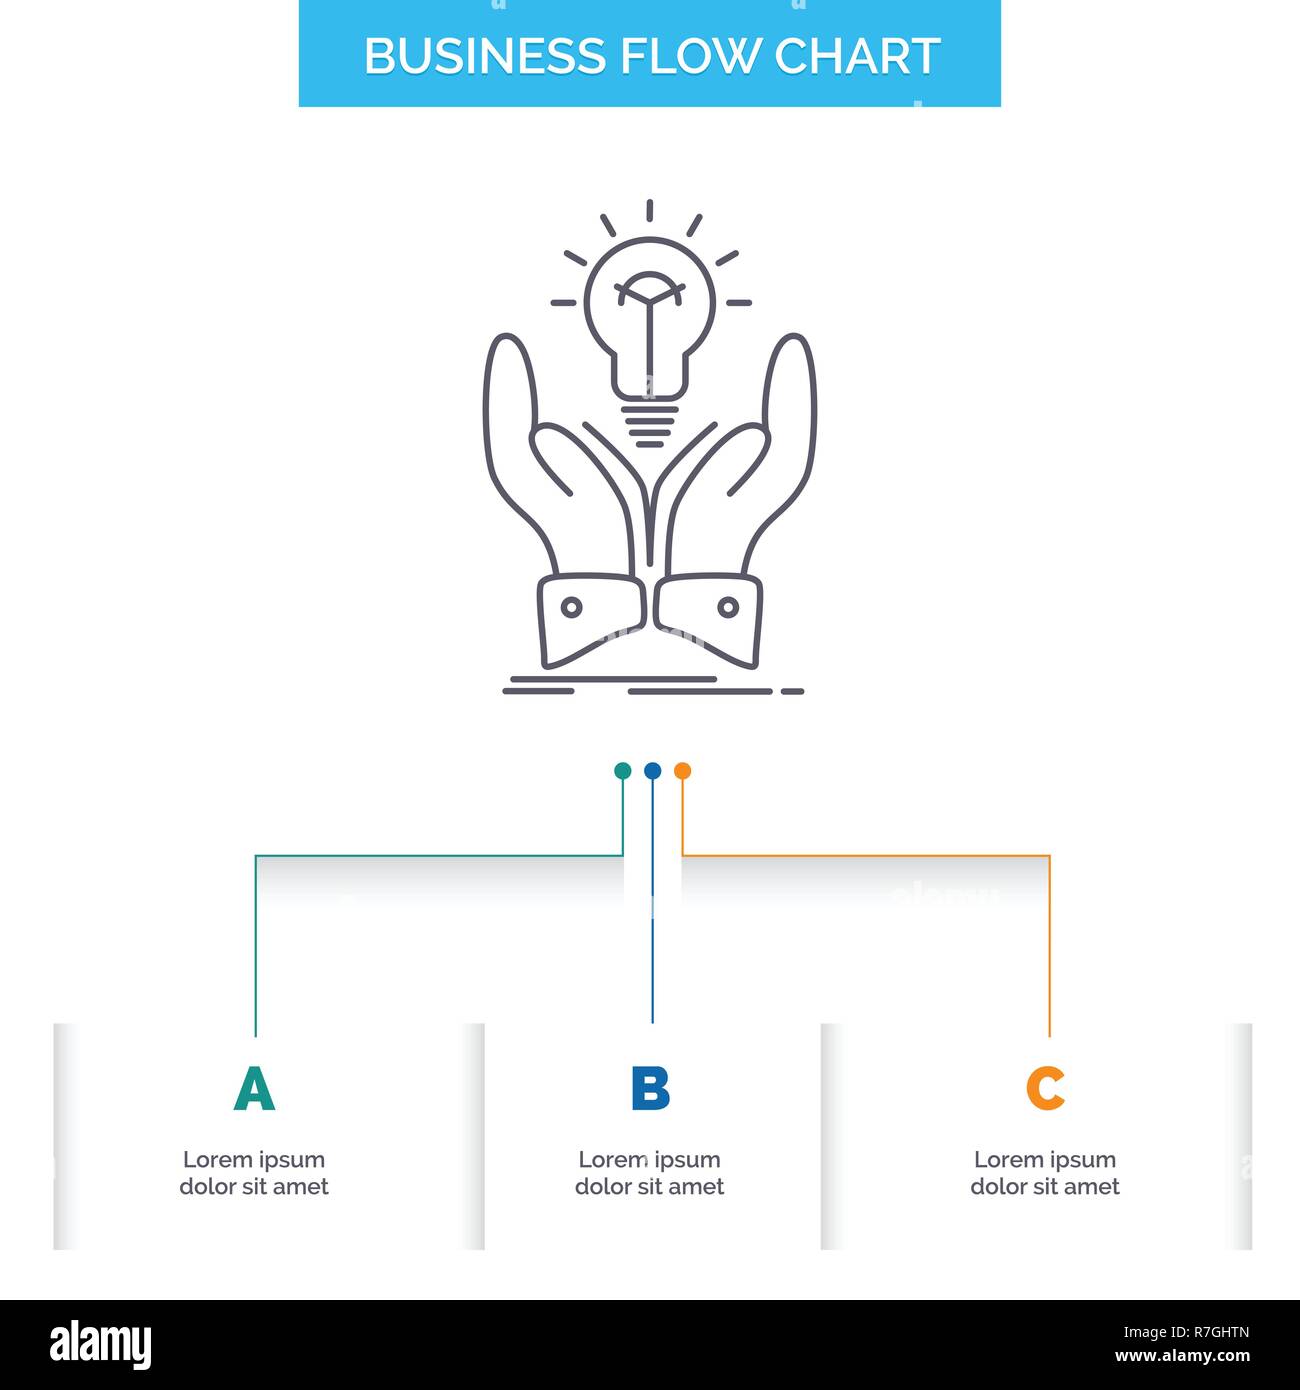 Business Flow Chart Creator